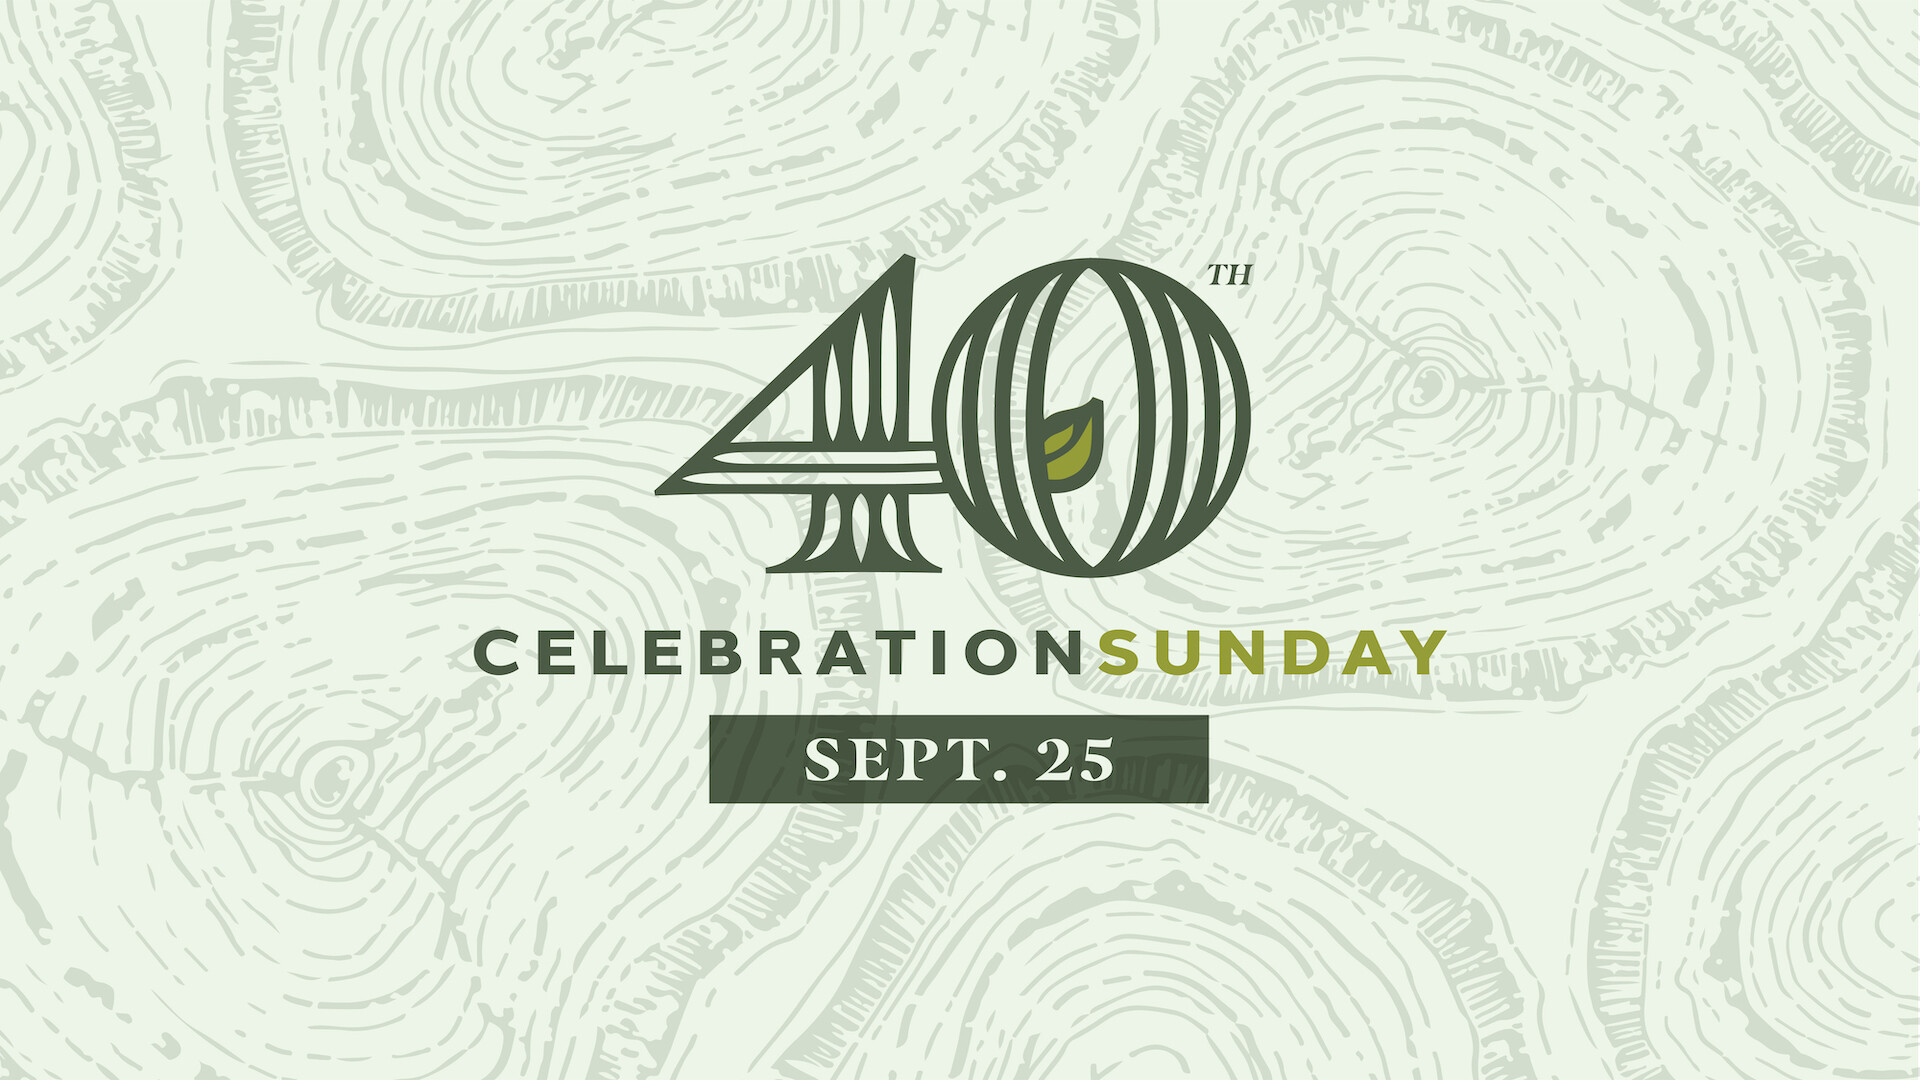 40th Celebration Sunday